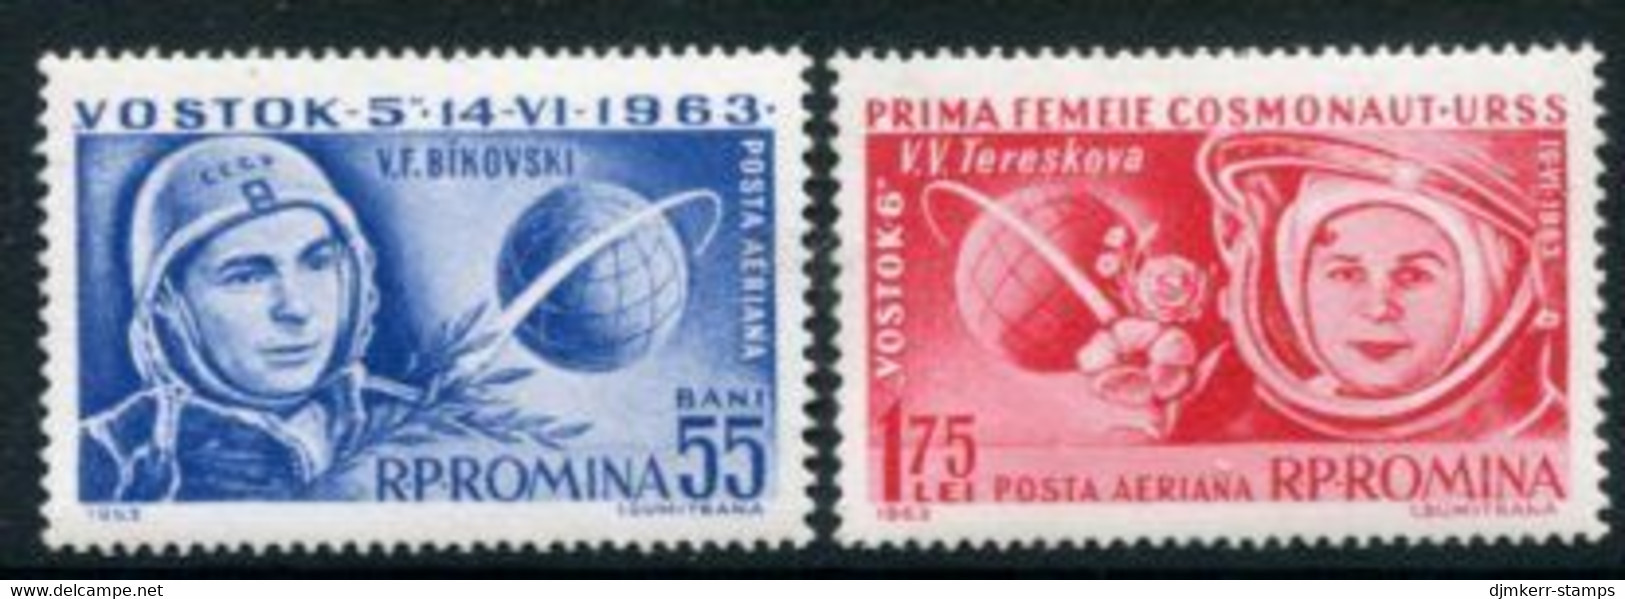 ROMANIA 1963 Vostok 5 And 6 Space Flights MNH / **.  Michel 2171-72 - Nuevos